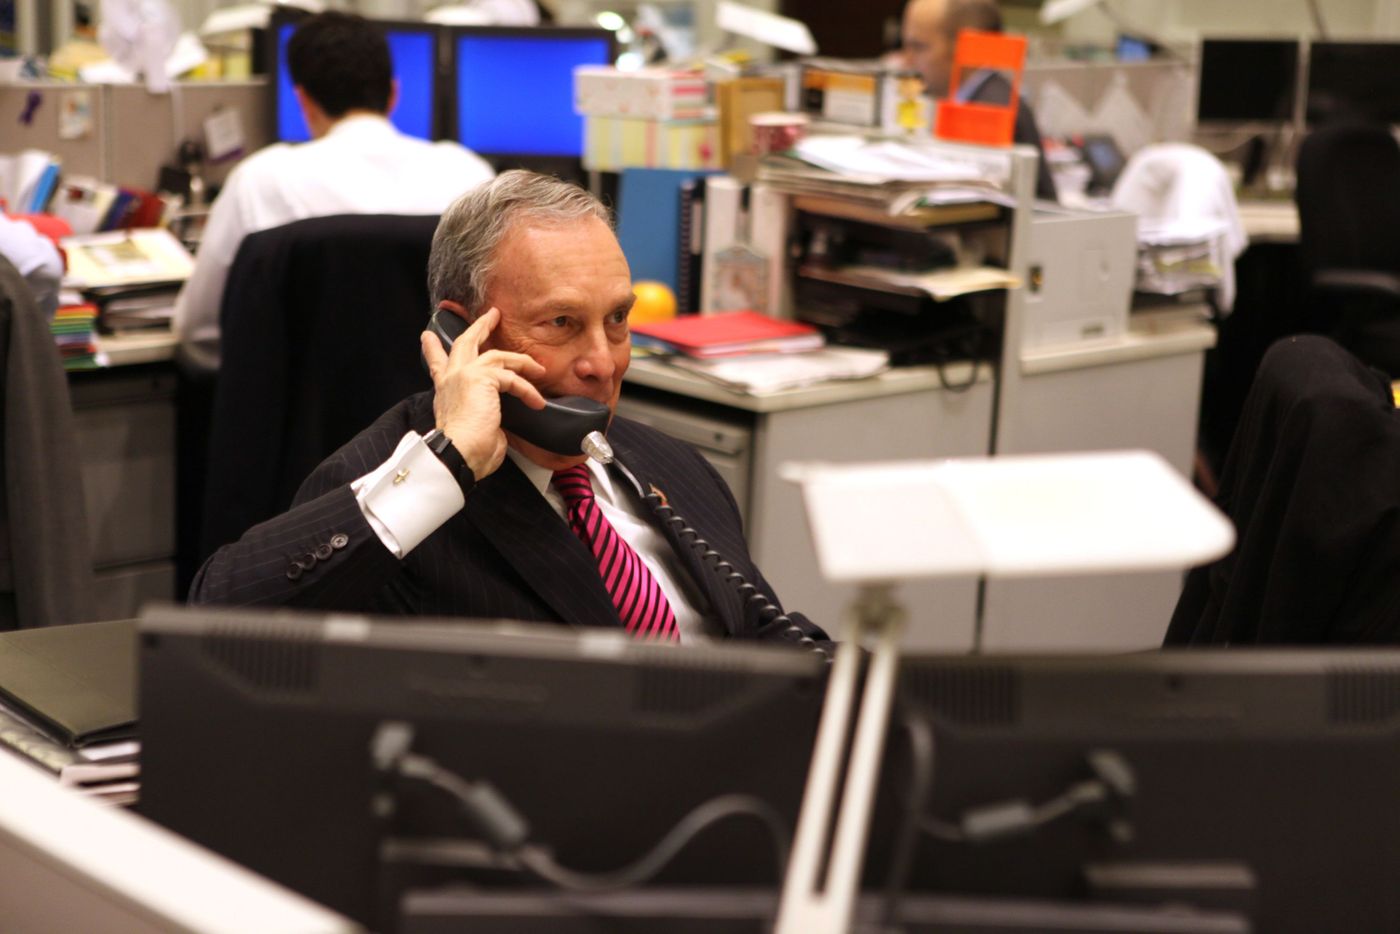 Then-Mayor Michael Bloomberg works in December 2011